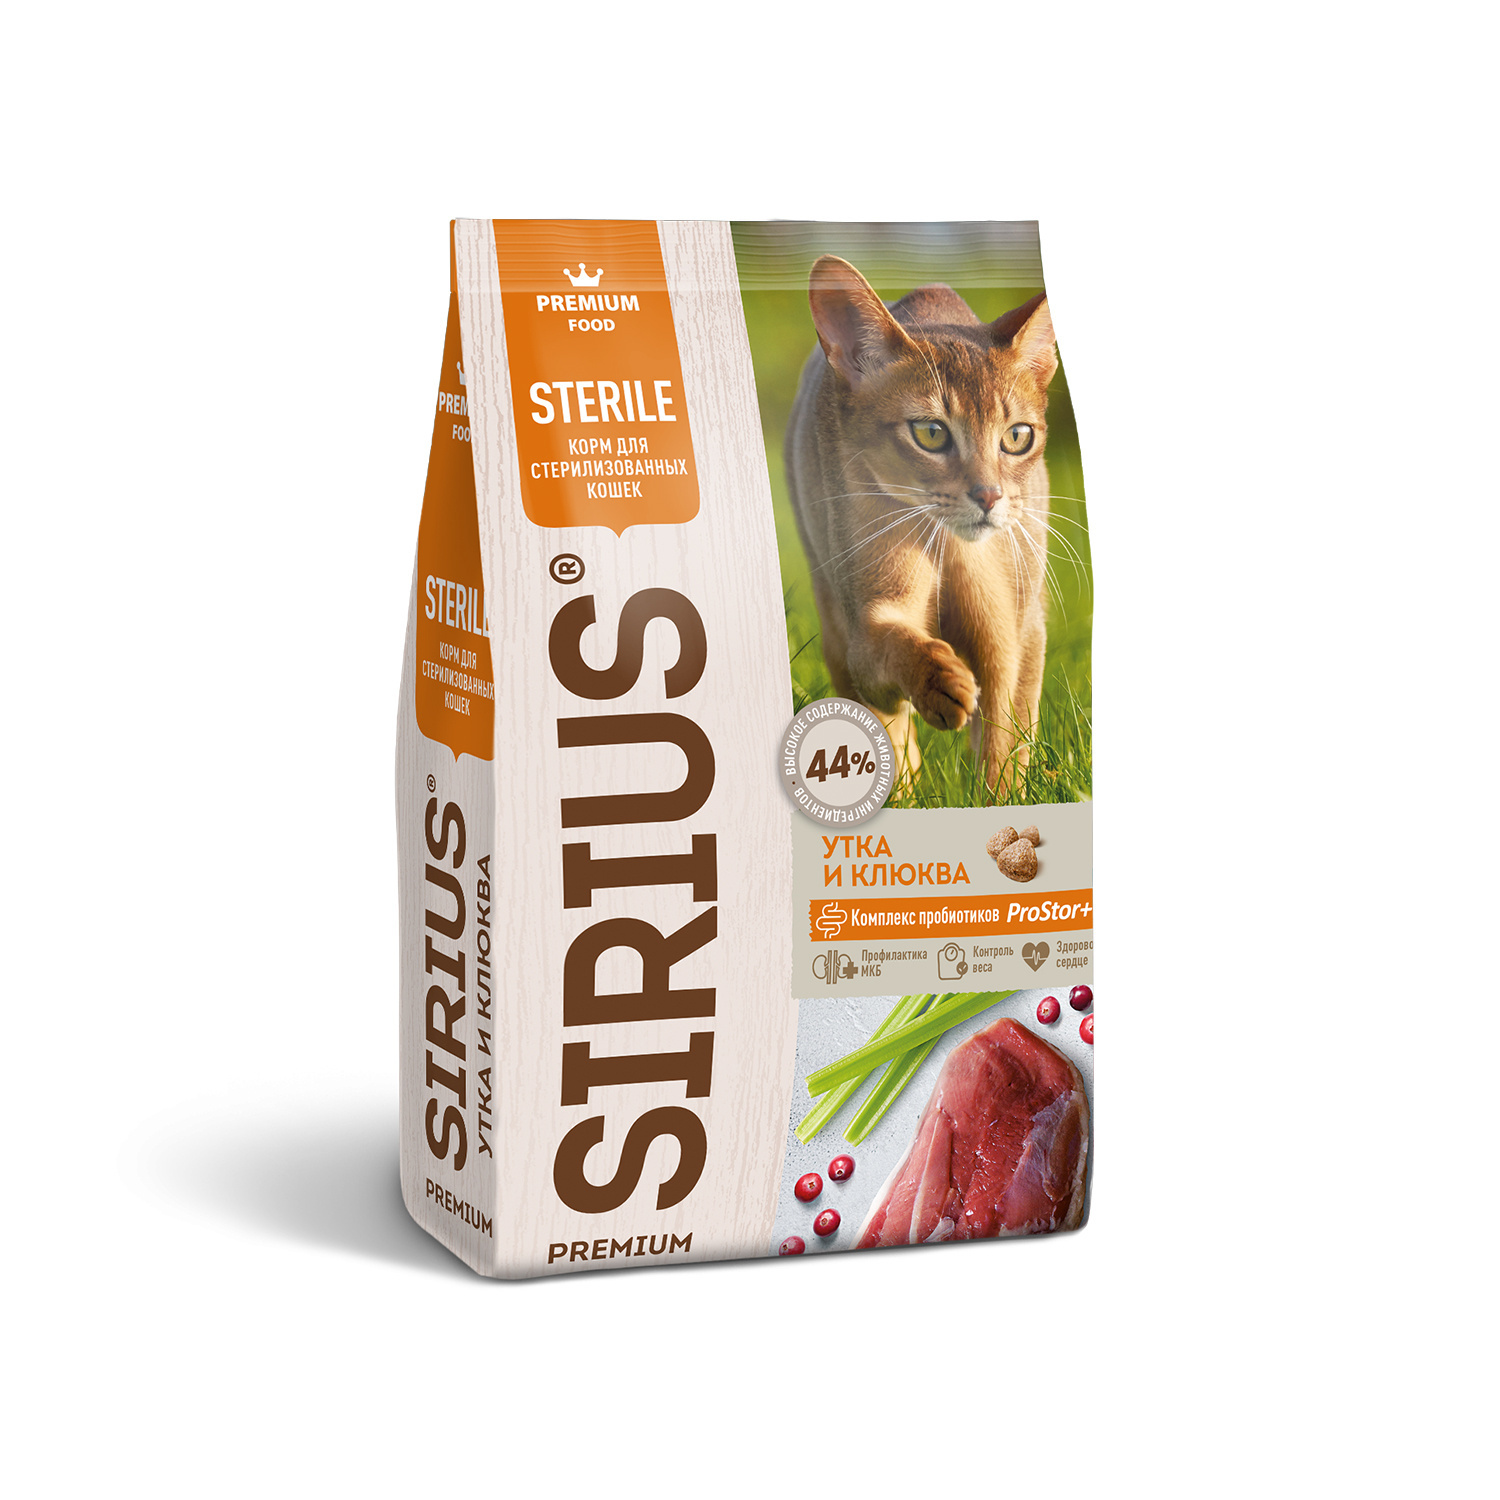 Sirius Sirius сухой корм для стерилизованных кошек, утка и клюква (10 кг) sirius sirius сухой корм для стерилизованных кошек утка и клюква 10 кг